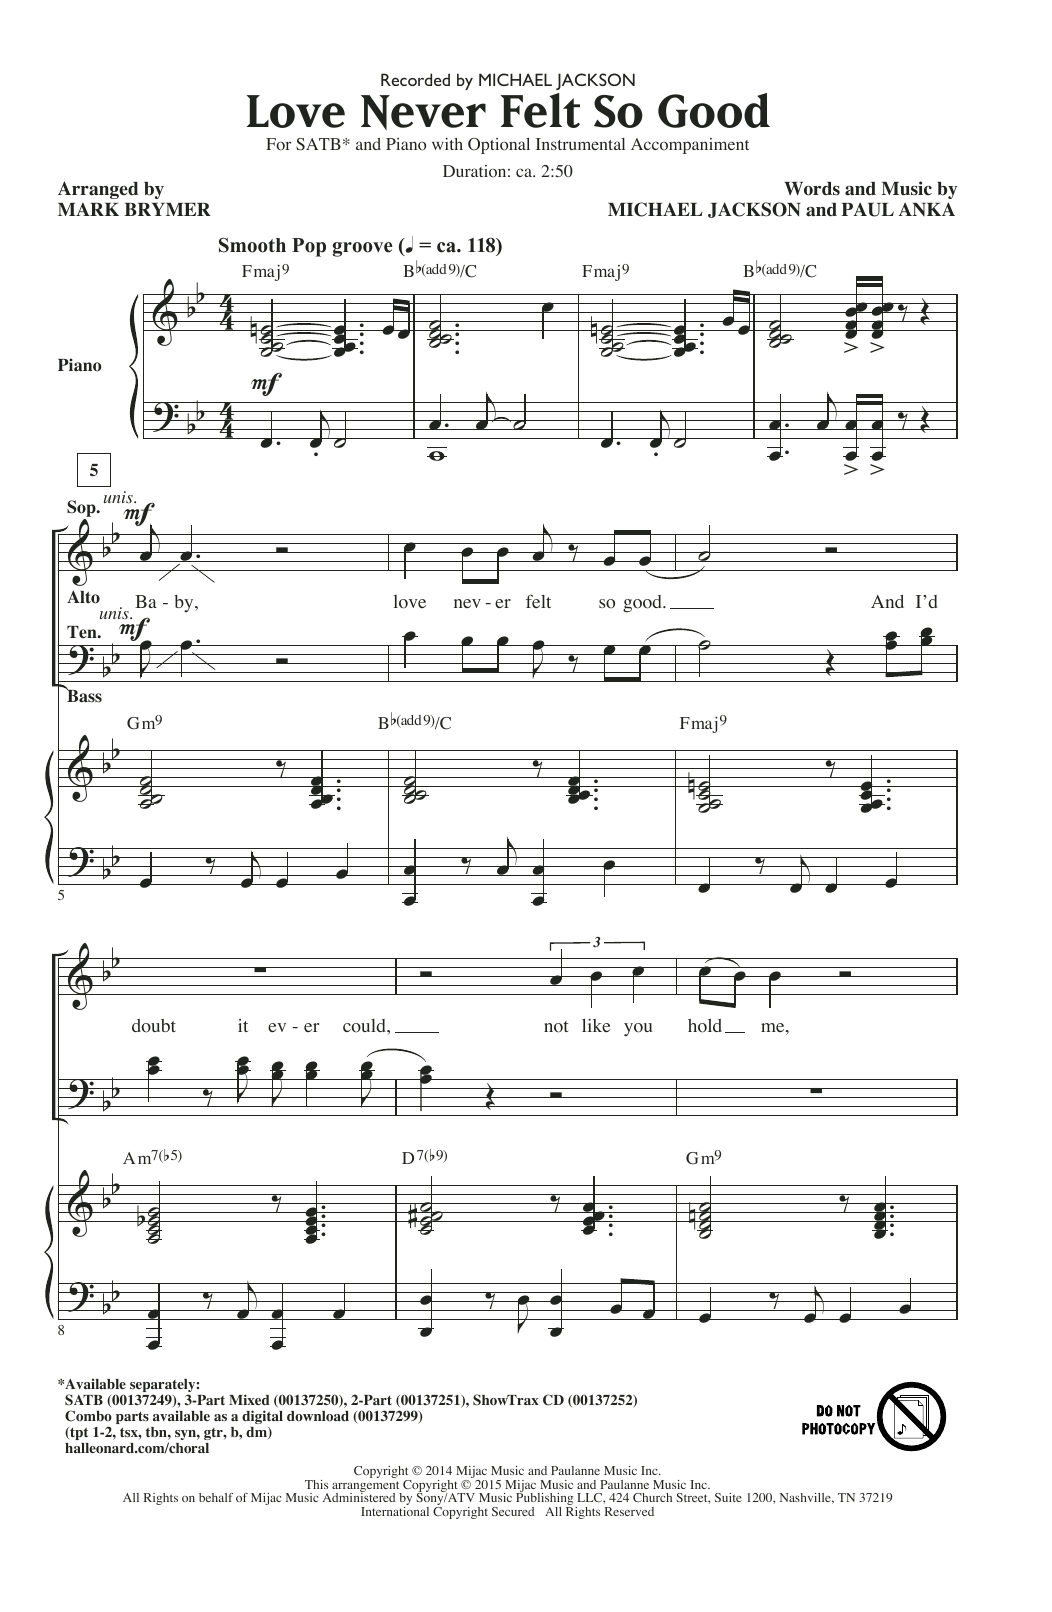 Michael Jackson Love Never Felt So Good (arr. Mark Brymer) Sheet Music Notes & Chords for SATB - Download or Print PDF